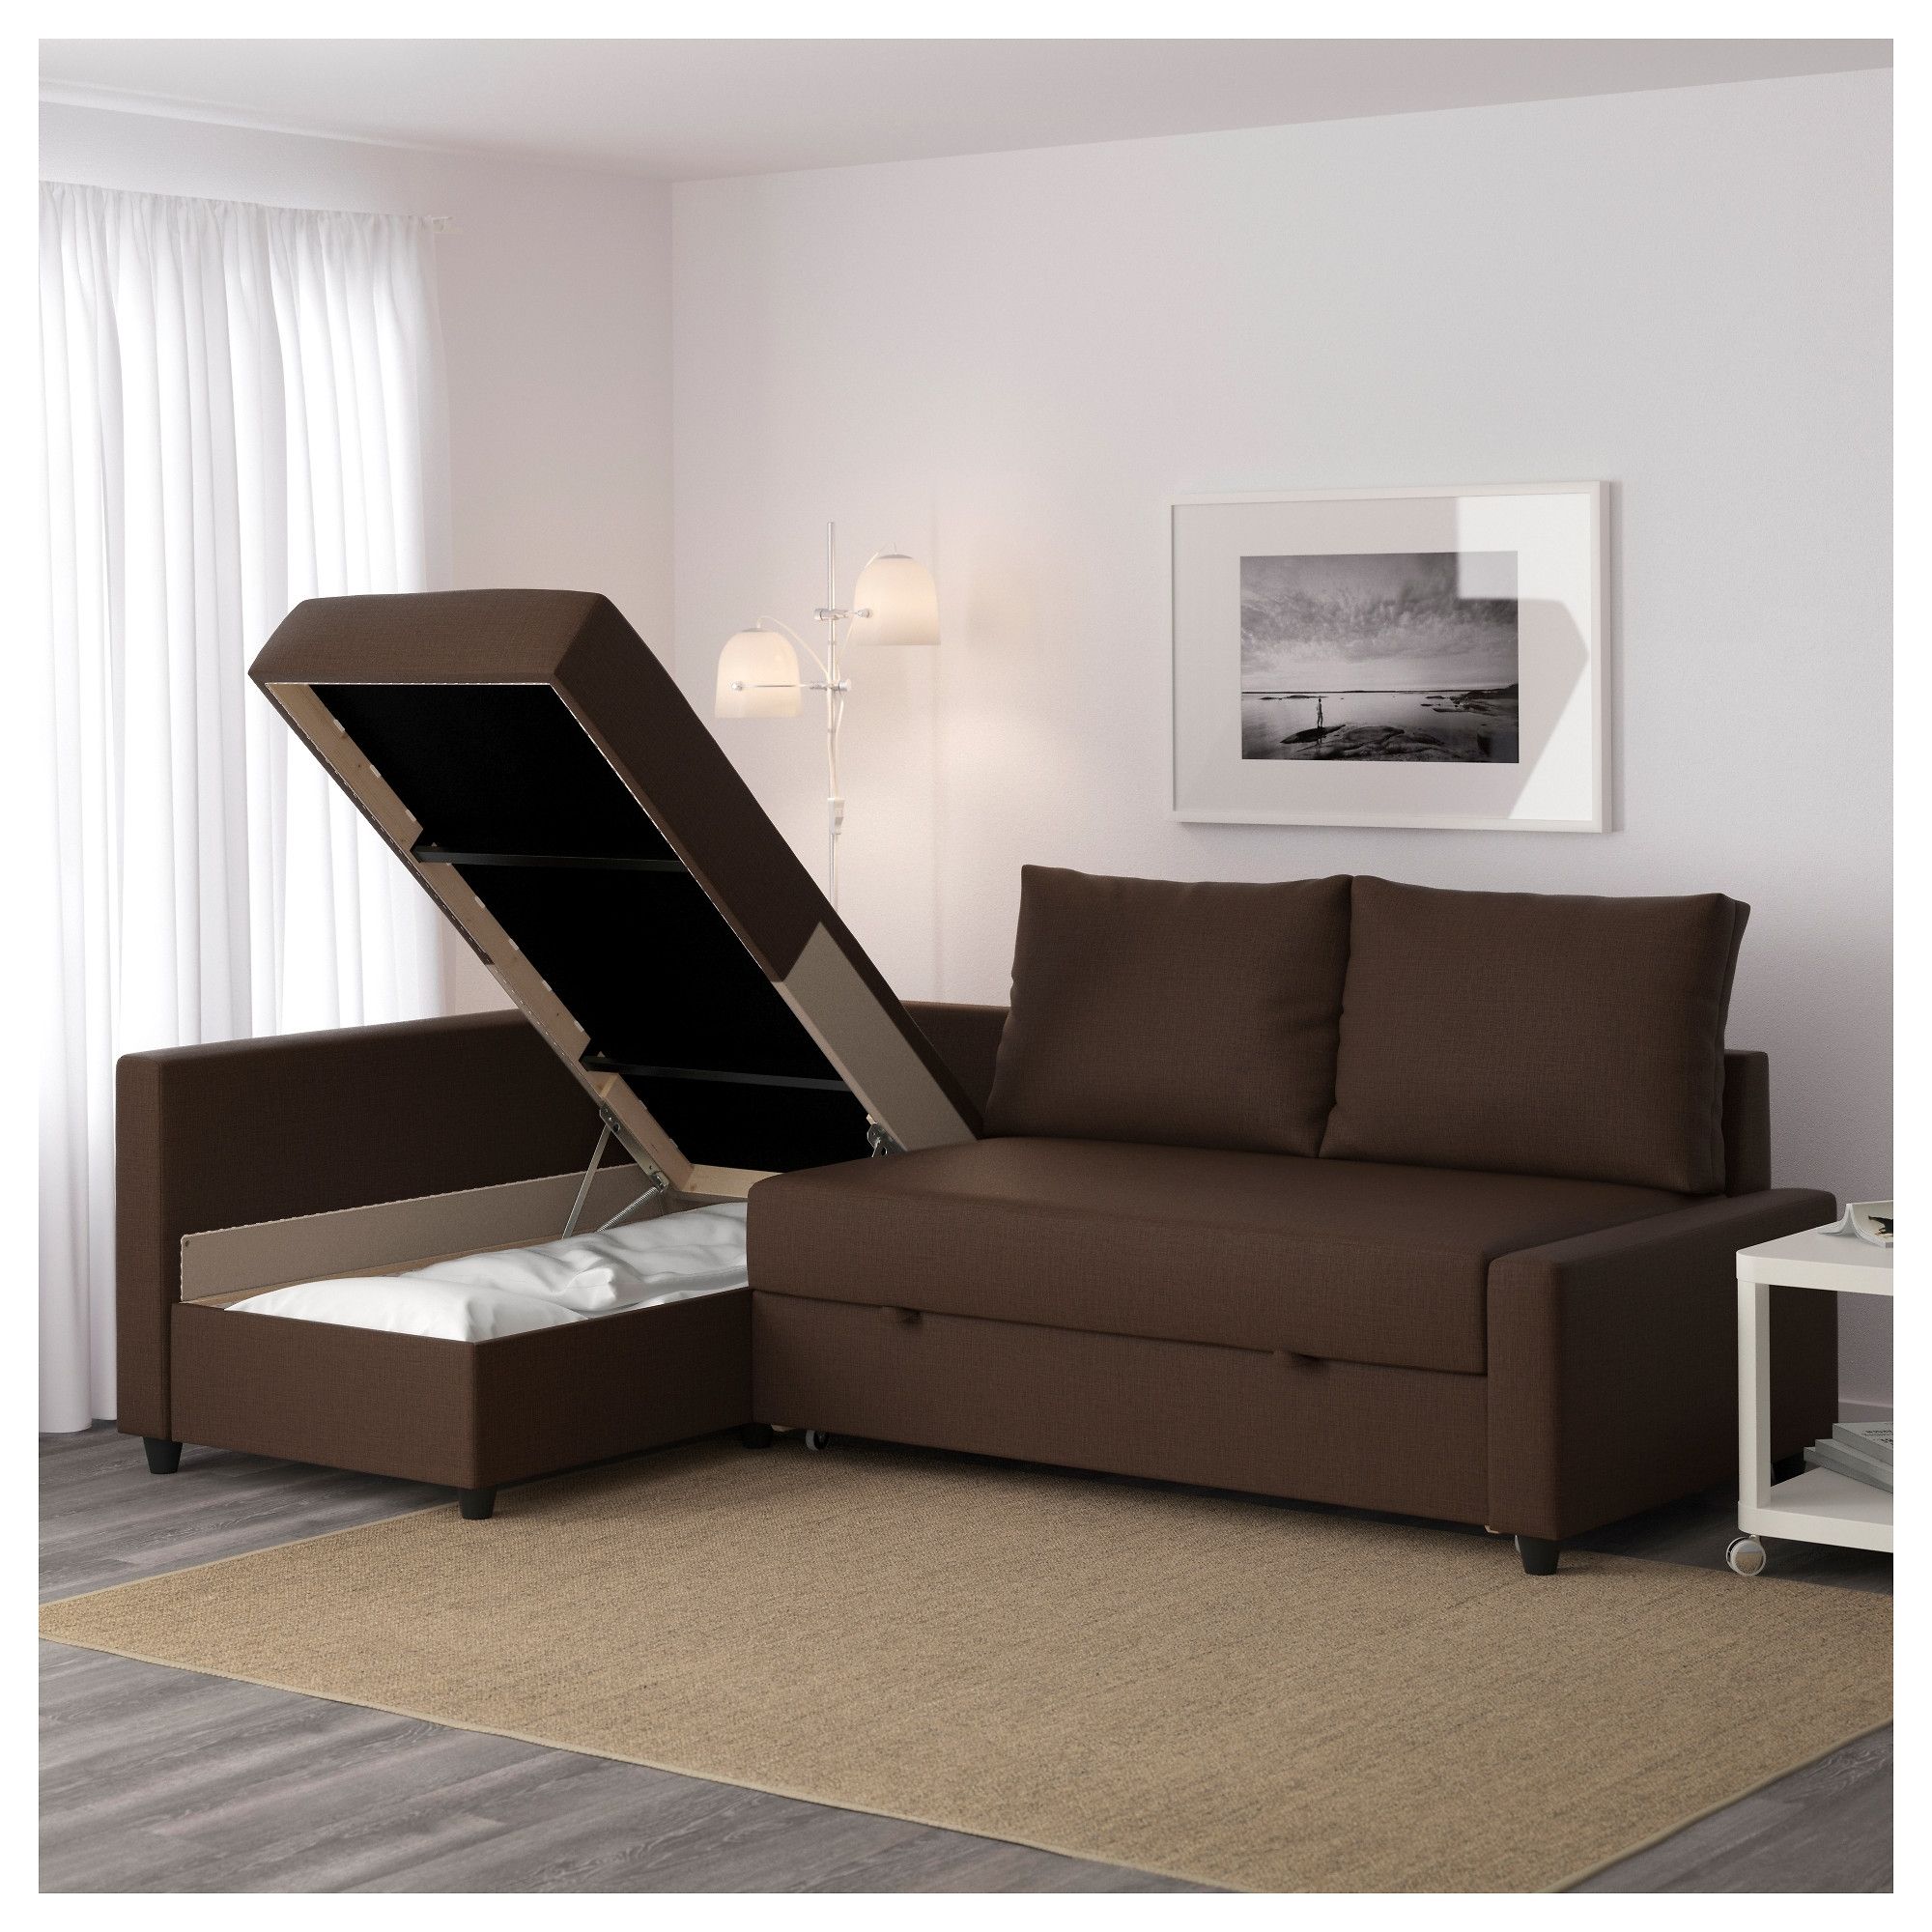 Friheten Corner Sofa Bed With Storage – Skiftebo Dark Gray – Ikea With Regard To Ikea Corner Sofas With Storage (View 5 of 10)